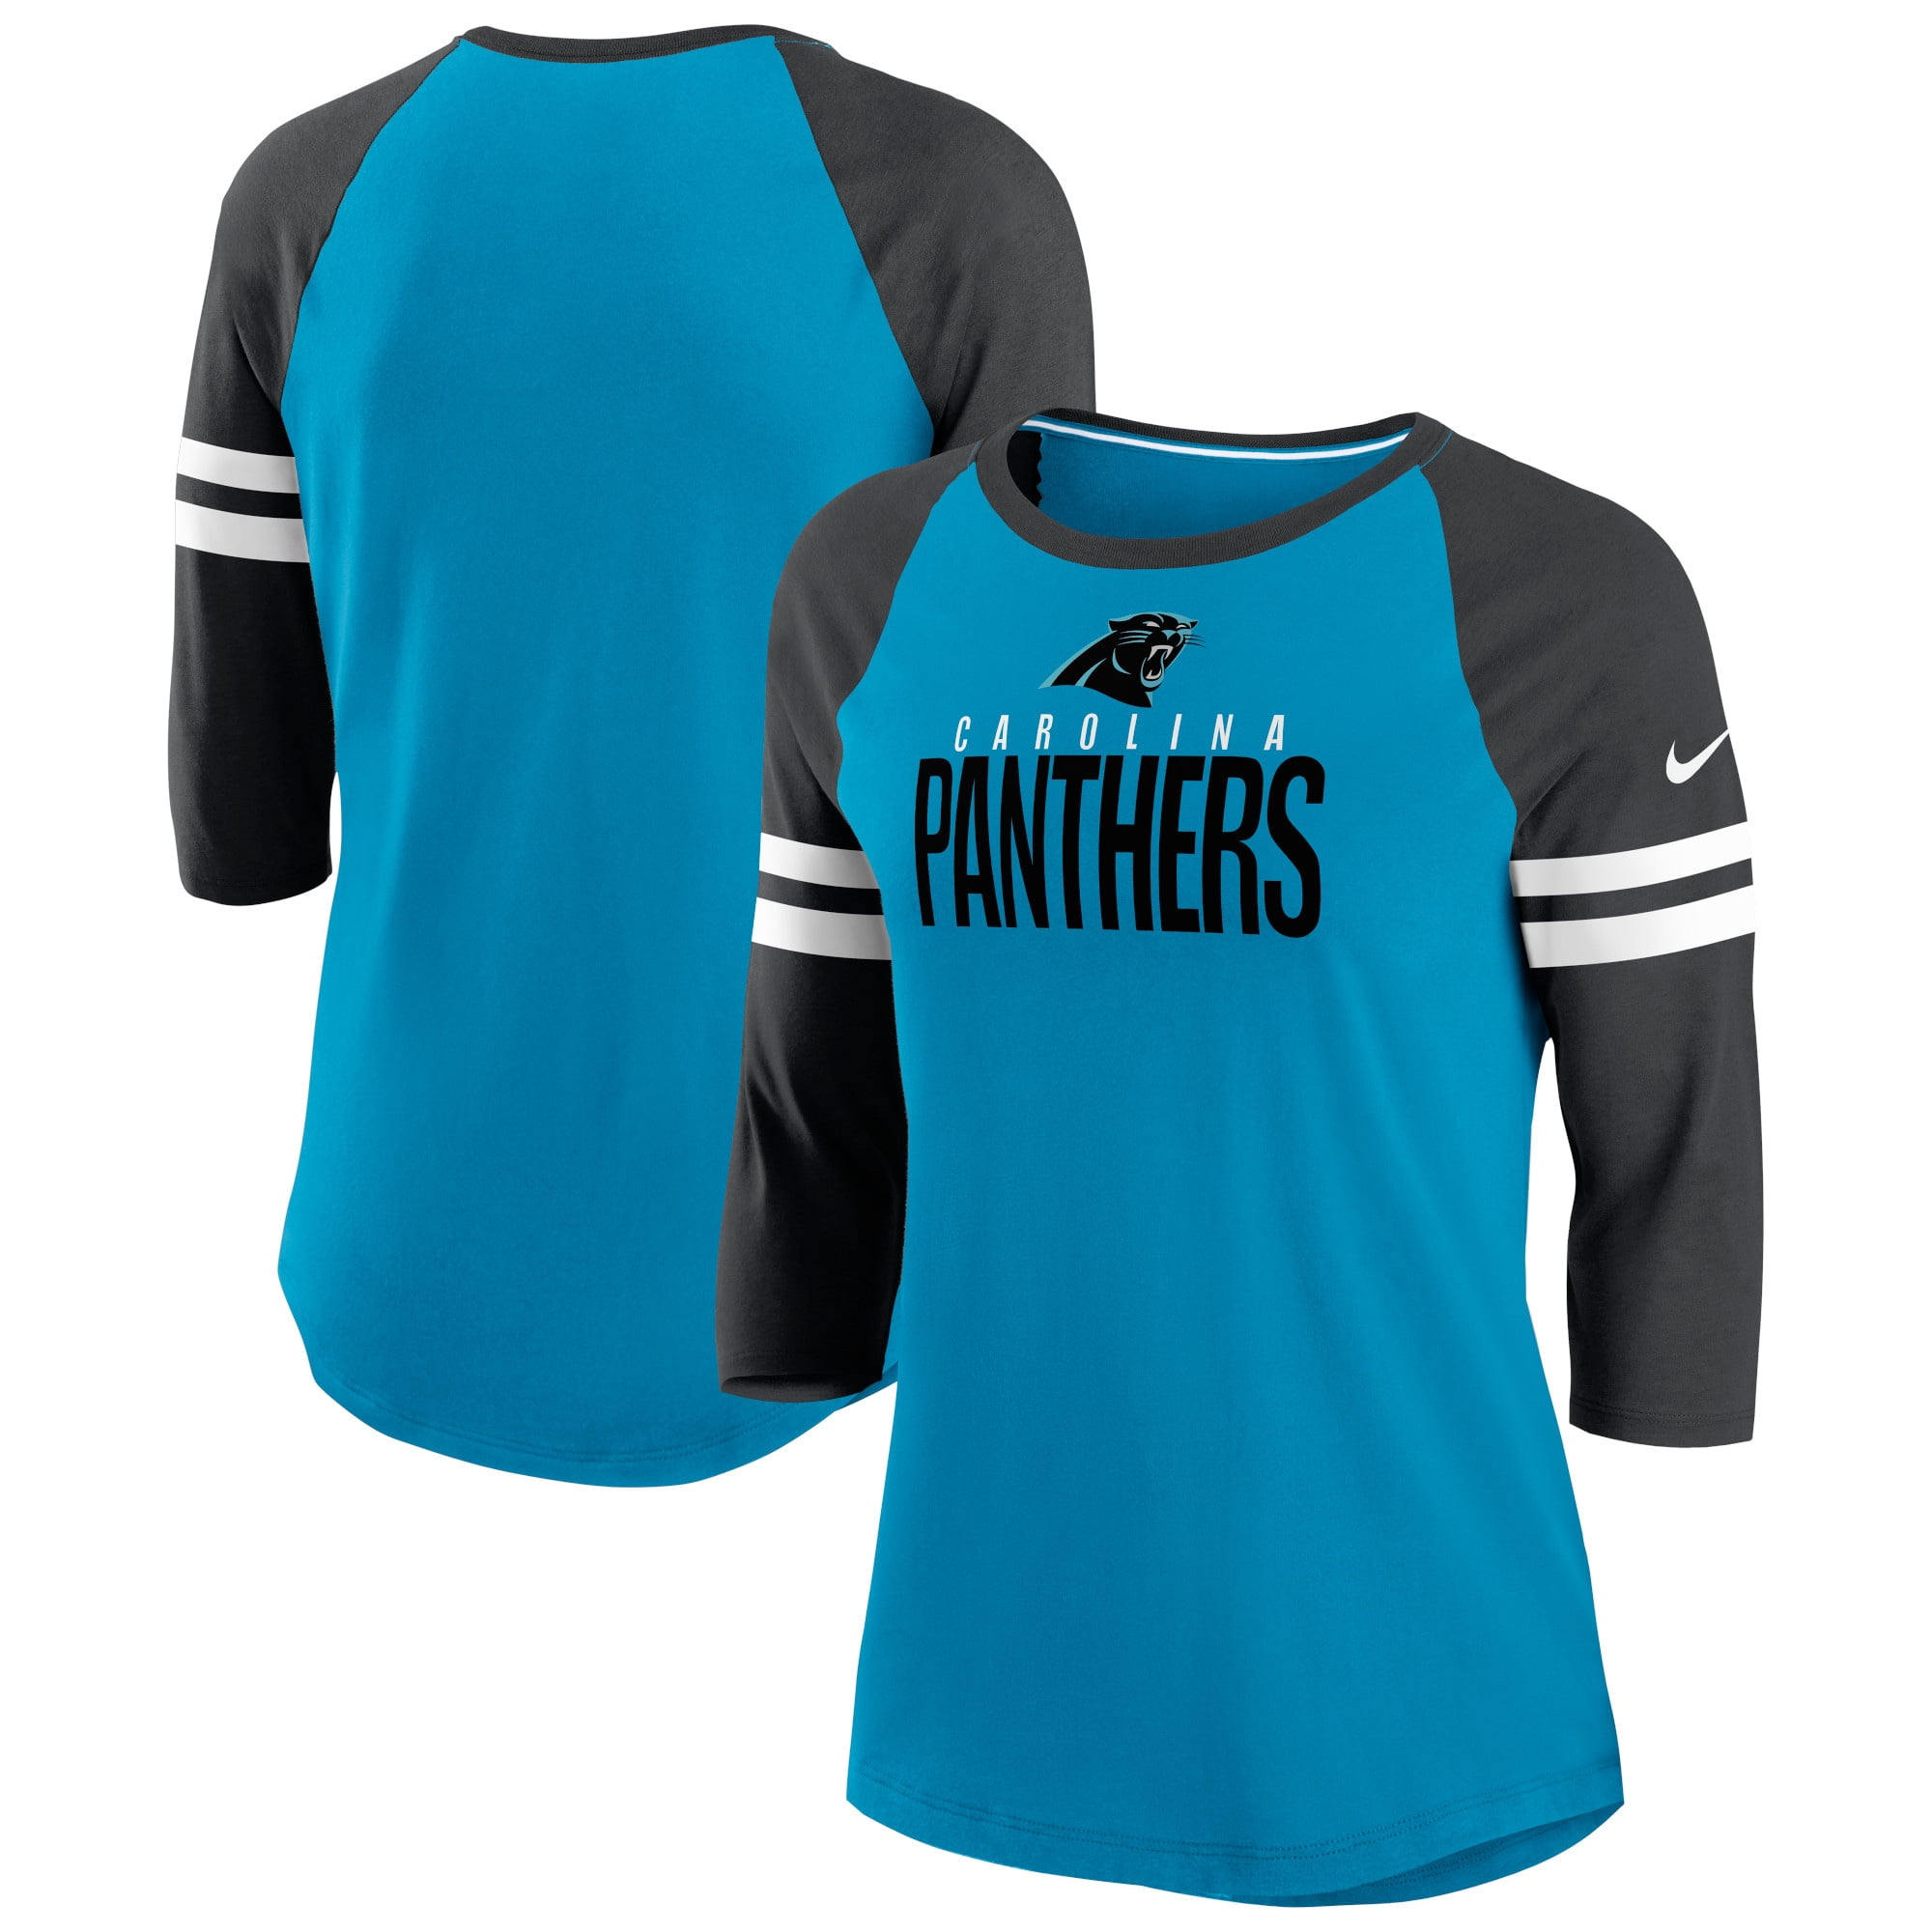 Carolina Panthers Sleeve Stripe 